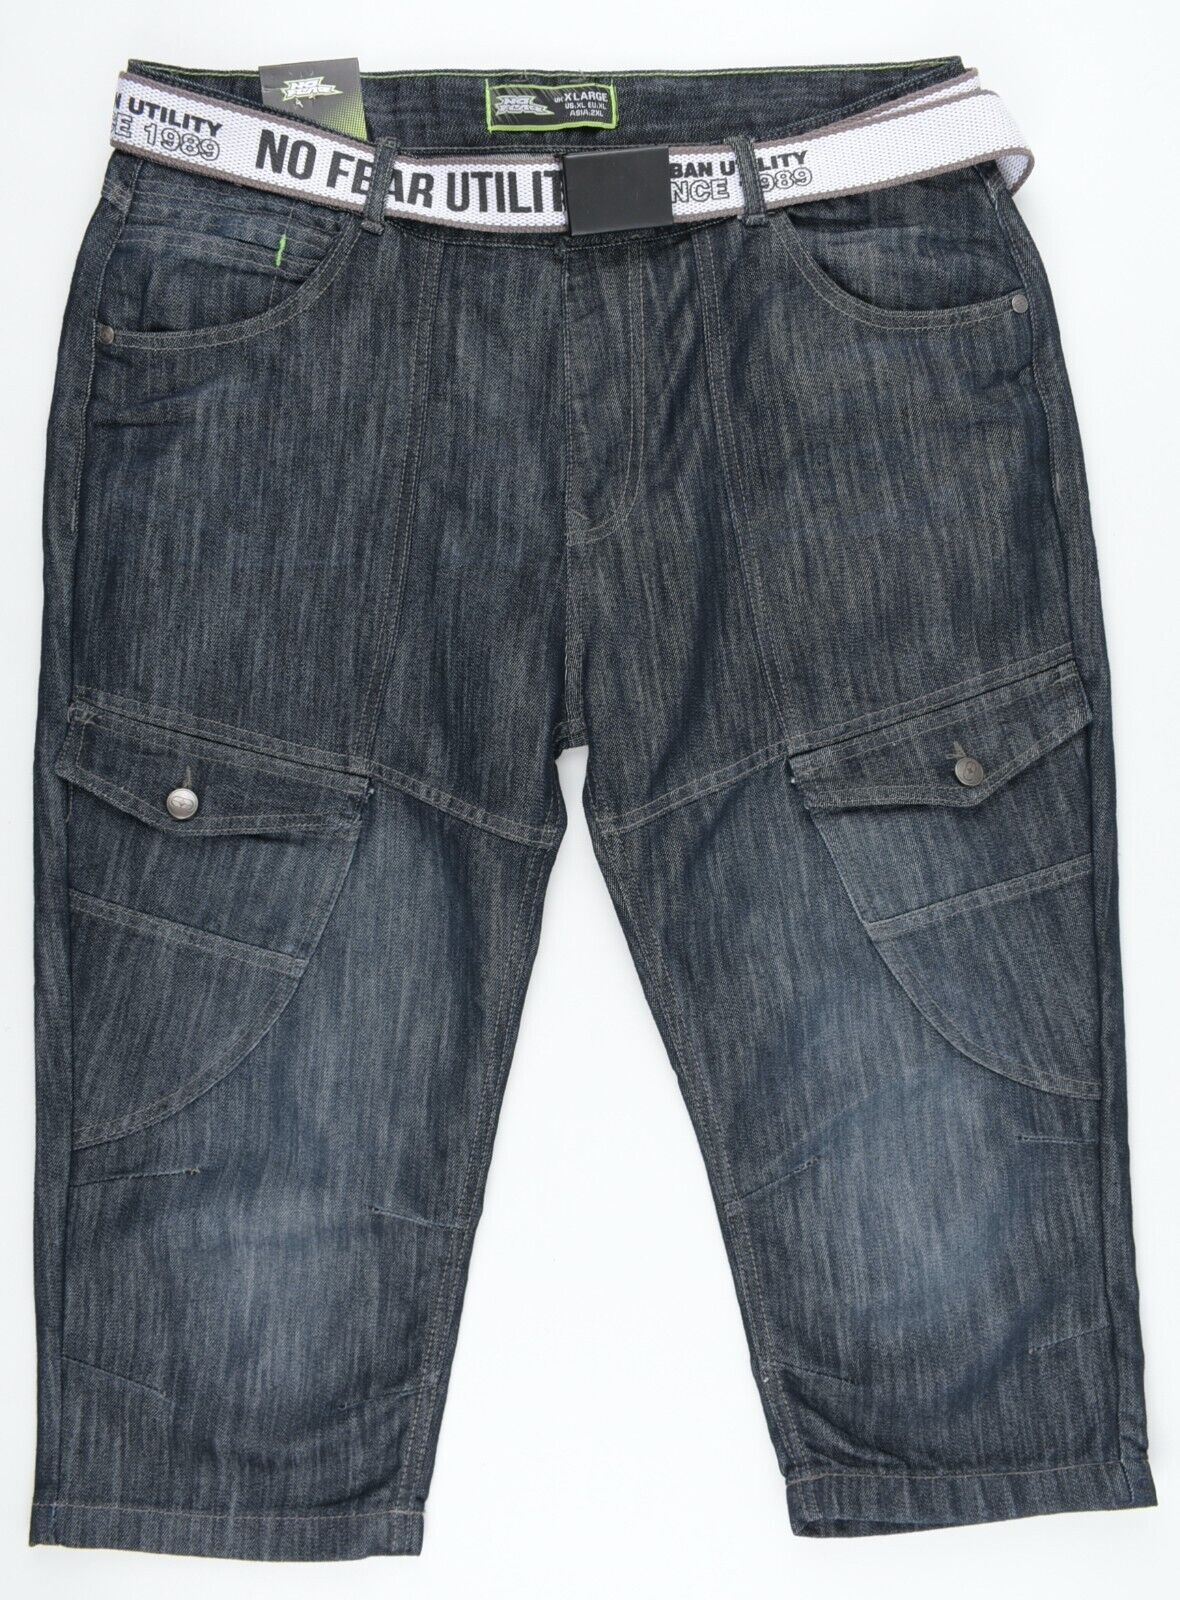 NO FEAR Men's Denim Shorts, Cargo Fit, Dark Blue Wash, size XL